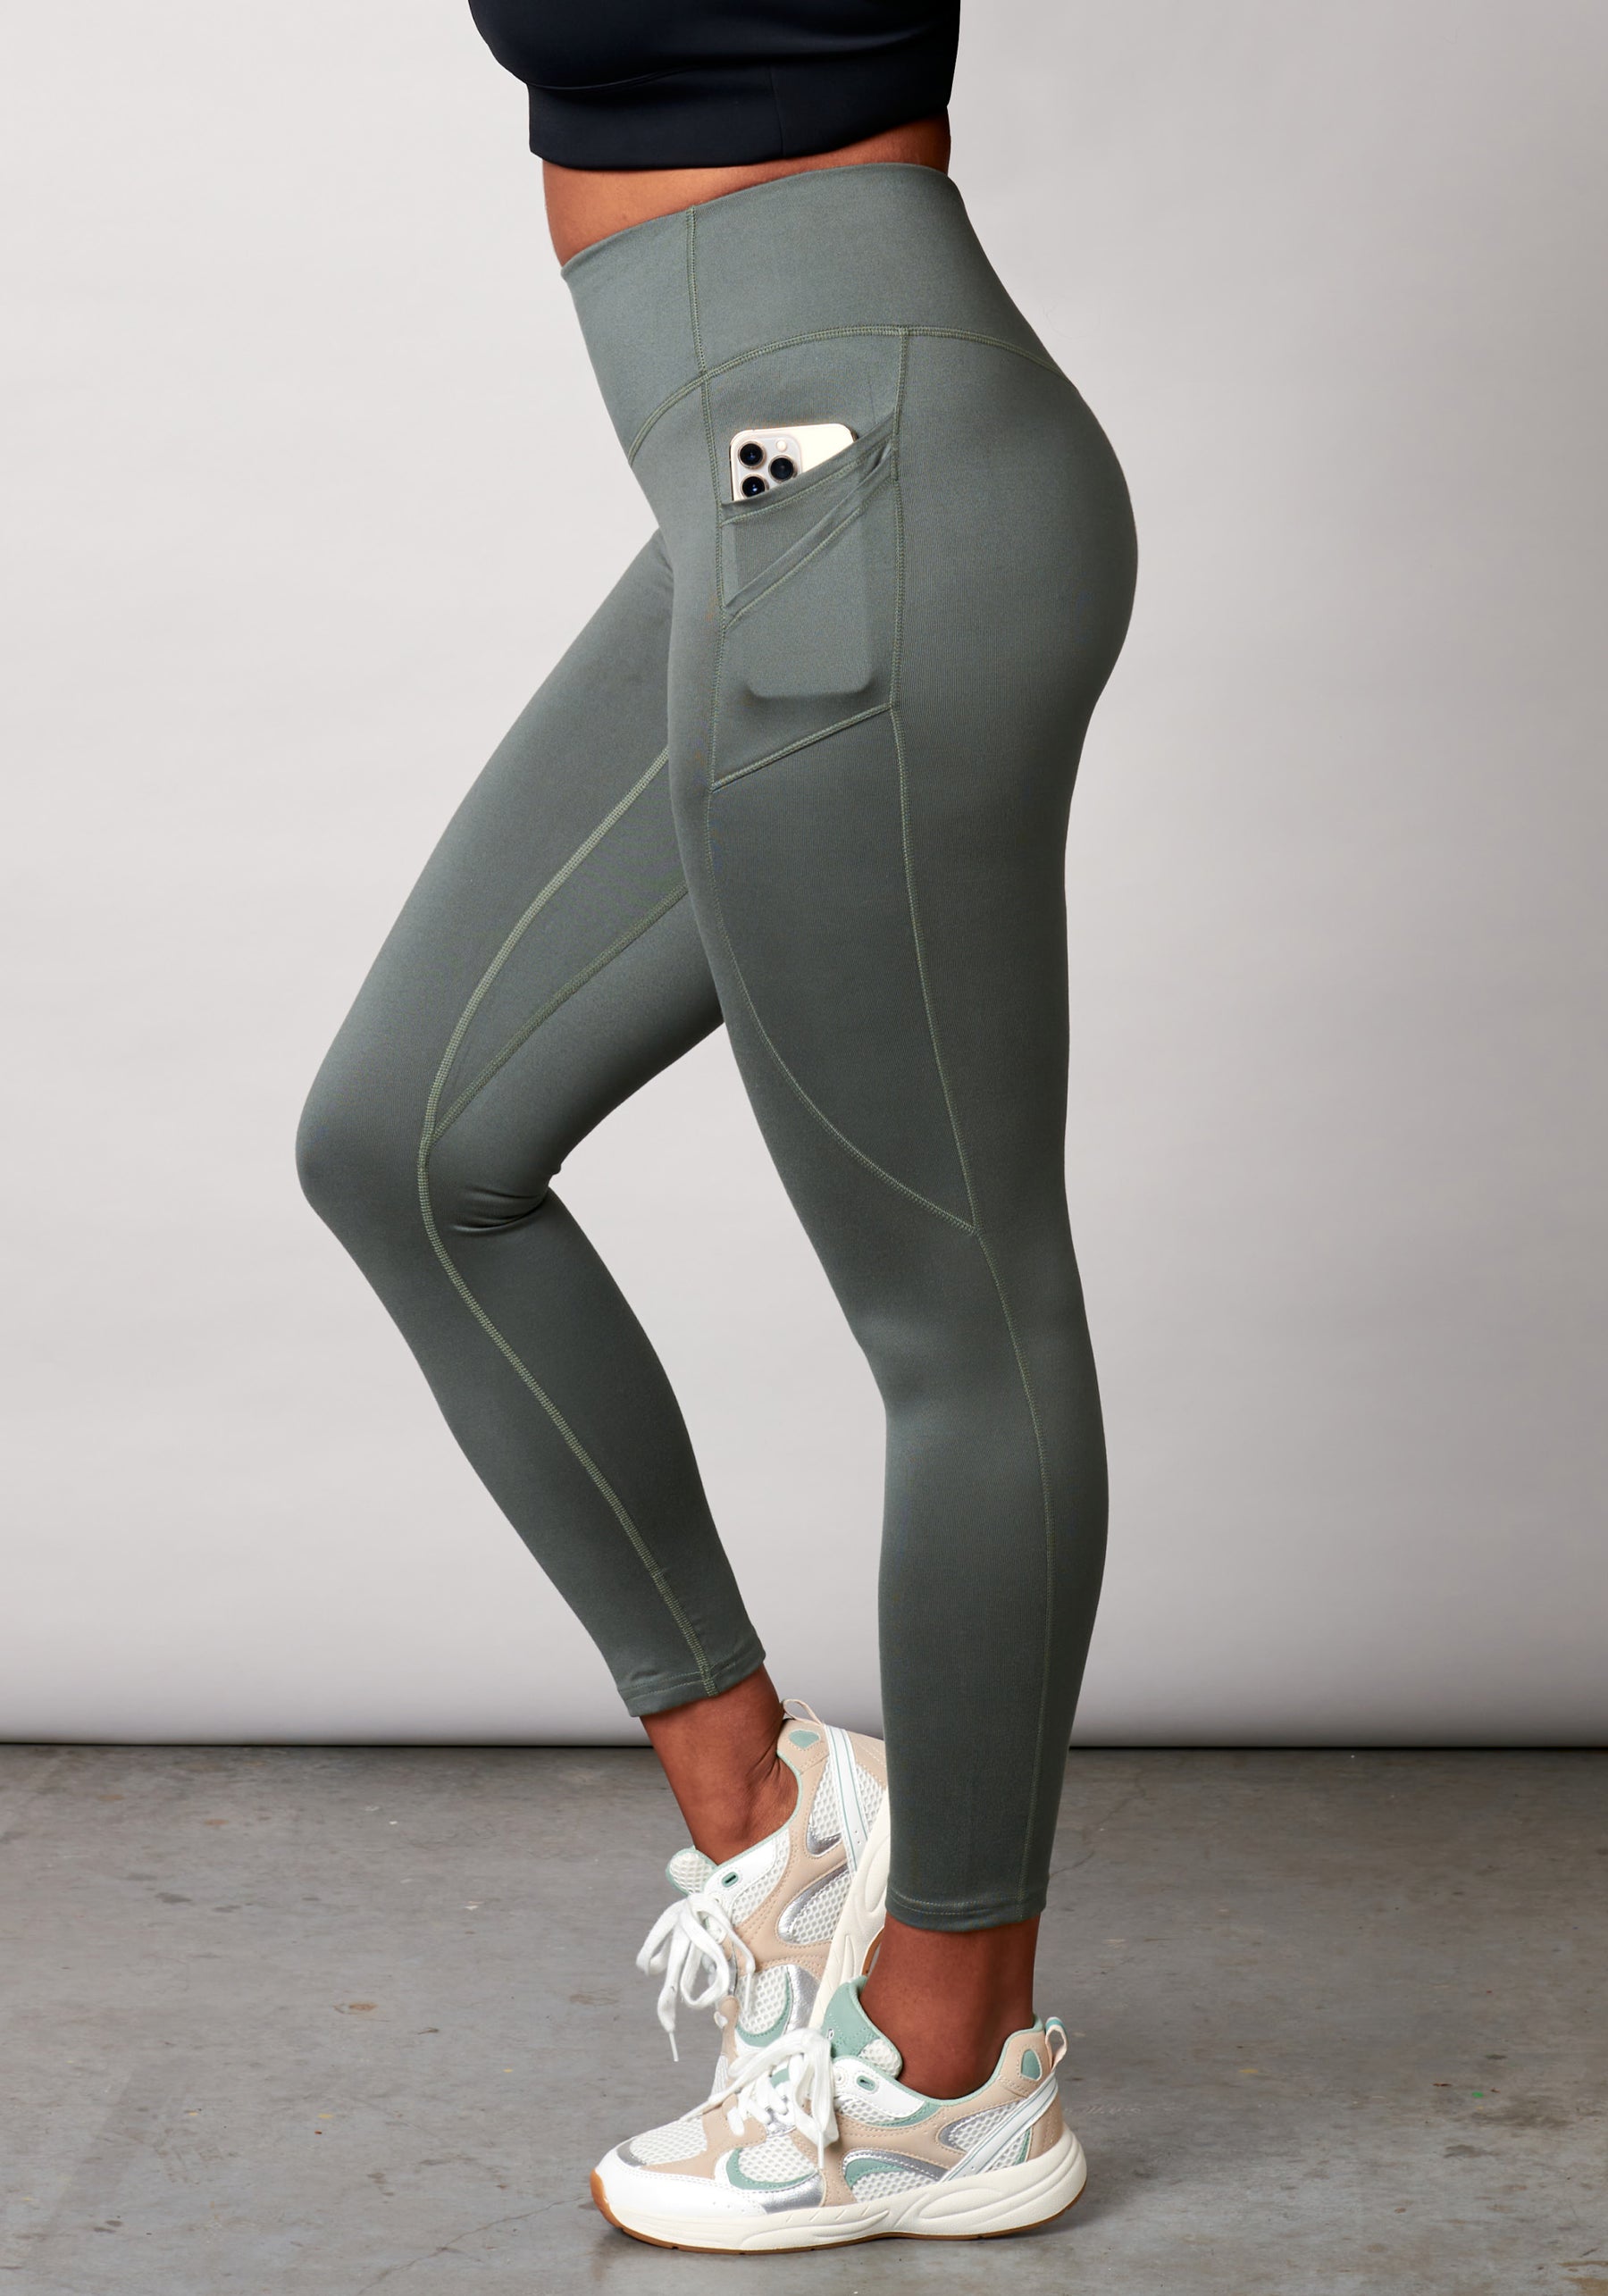 Comfy Fabric, Durable, Versatile, Everyday Yoga Leggings // the